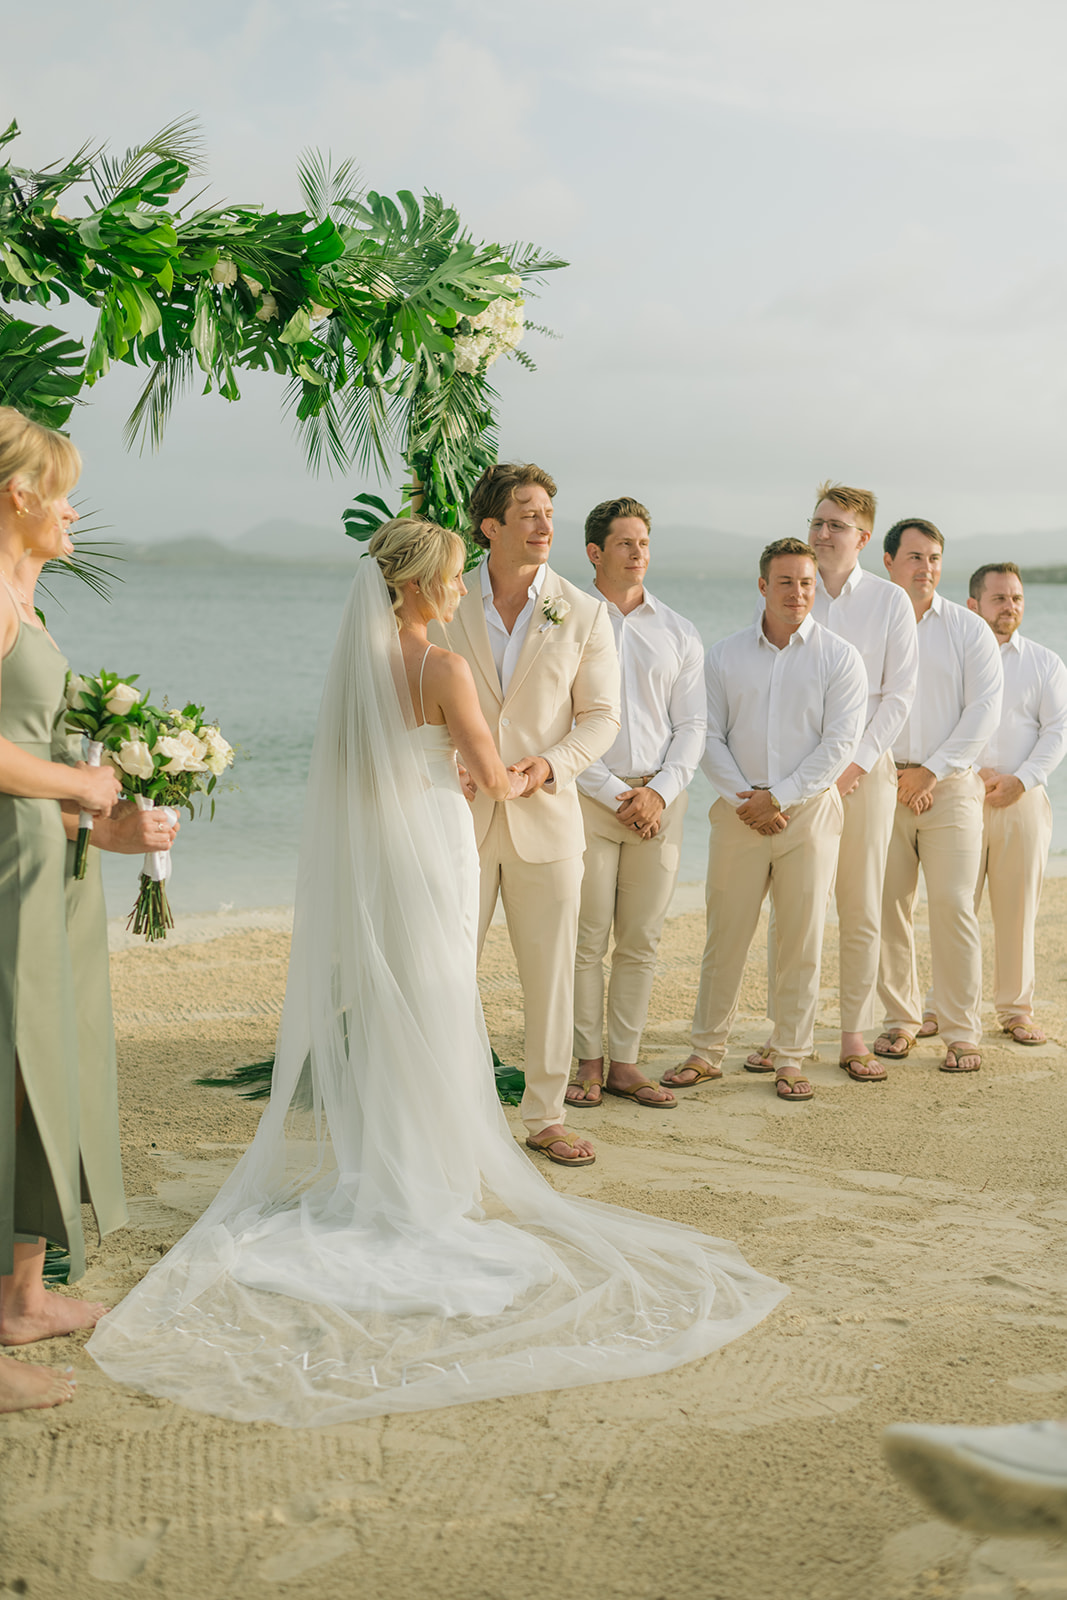 "Breathtaking Antigua Wedding Photography"
